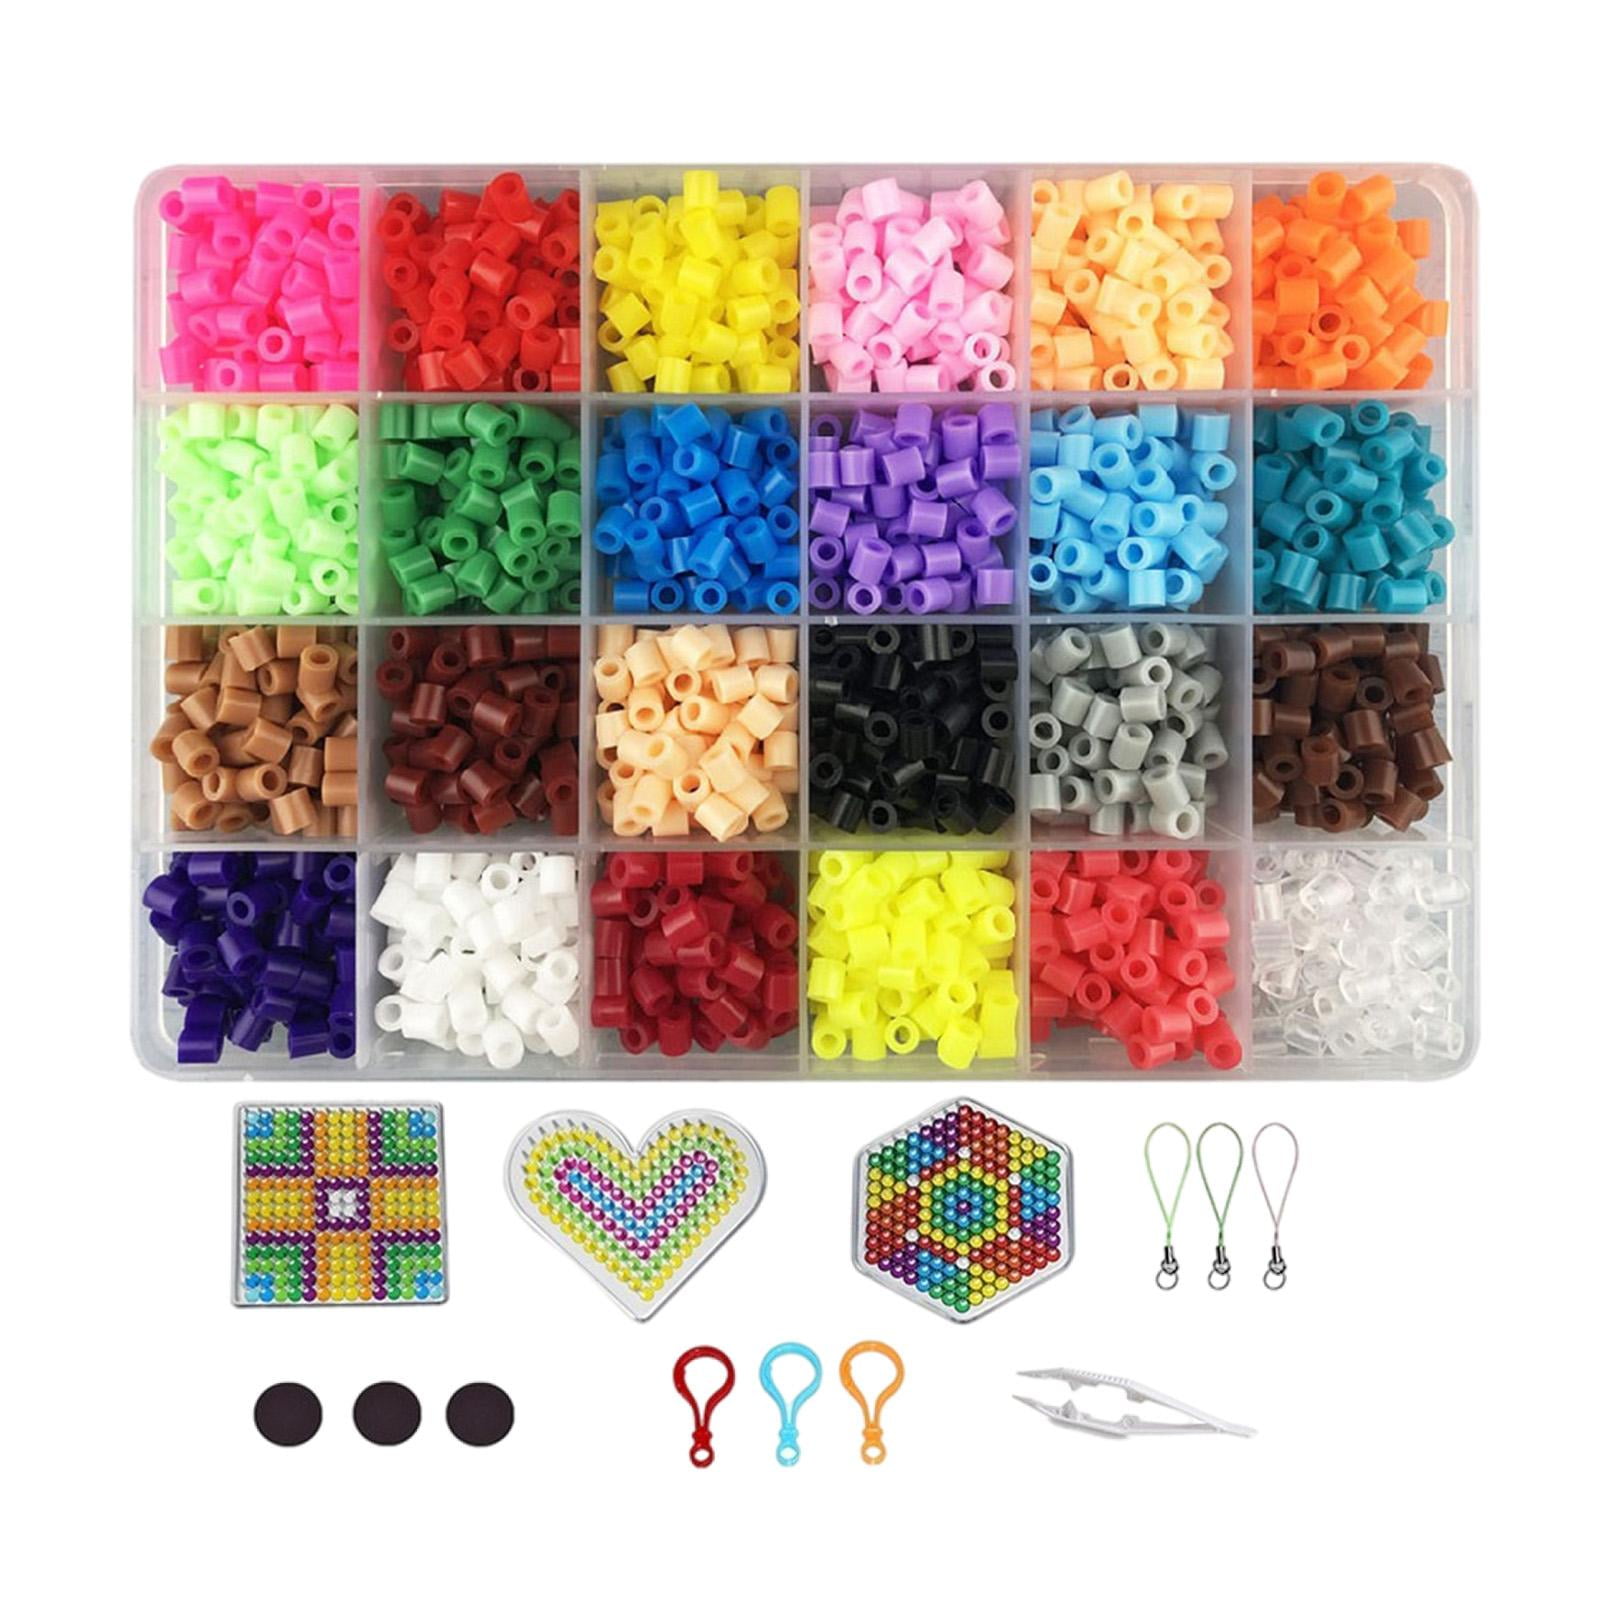 Hama Fuse Beads Kit Perler Beads W/ Patterns 2.6mm Fusion Activity Toy Hama Beads 